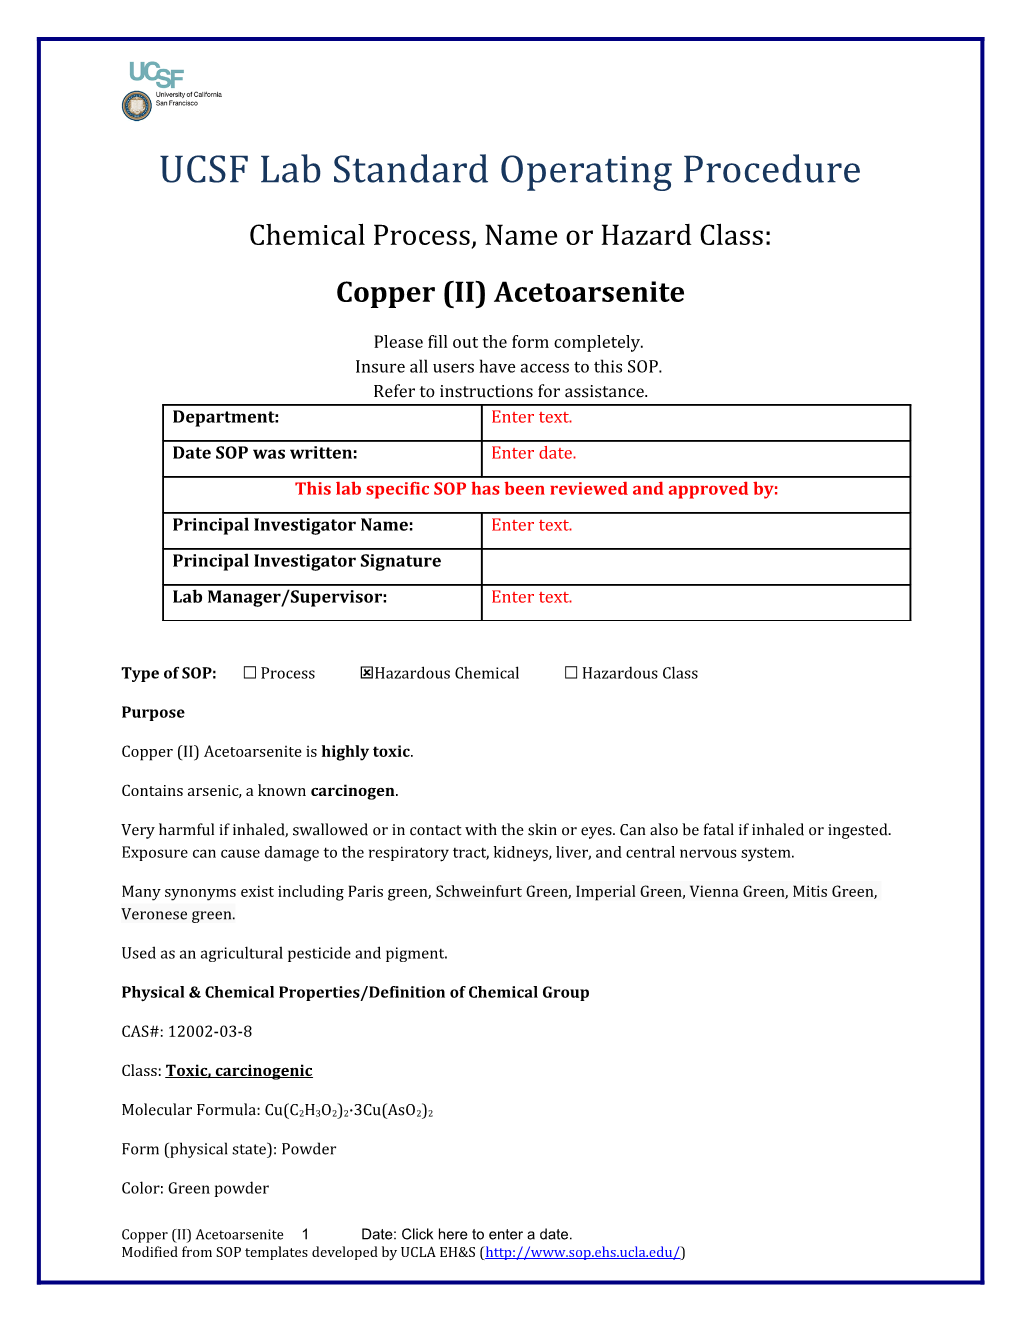 UCSF Lab Standard Operating Procedure s17